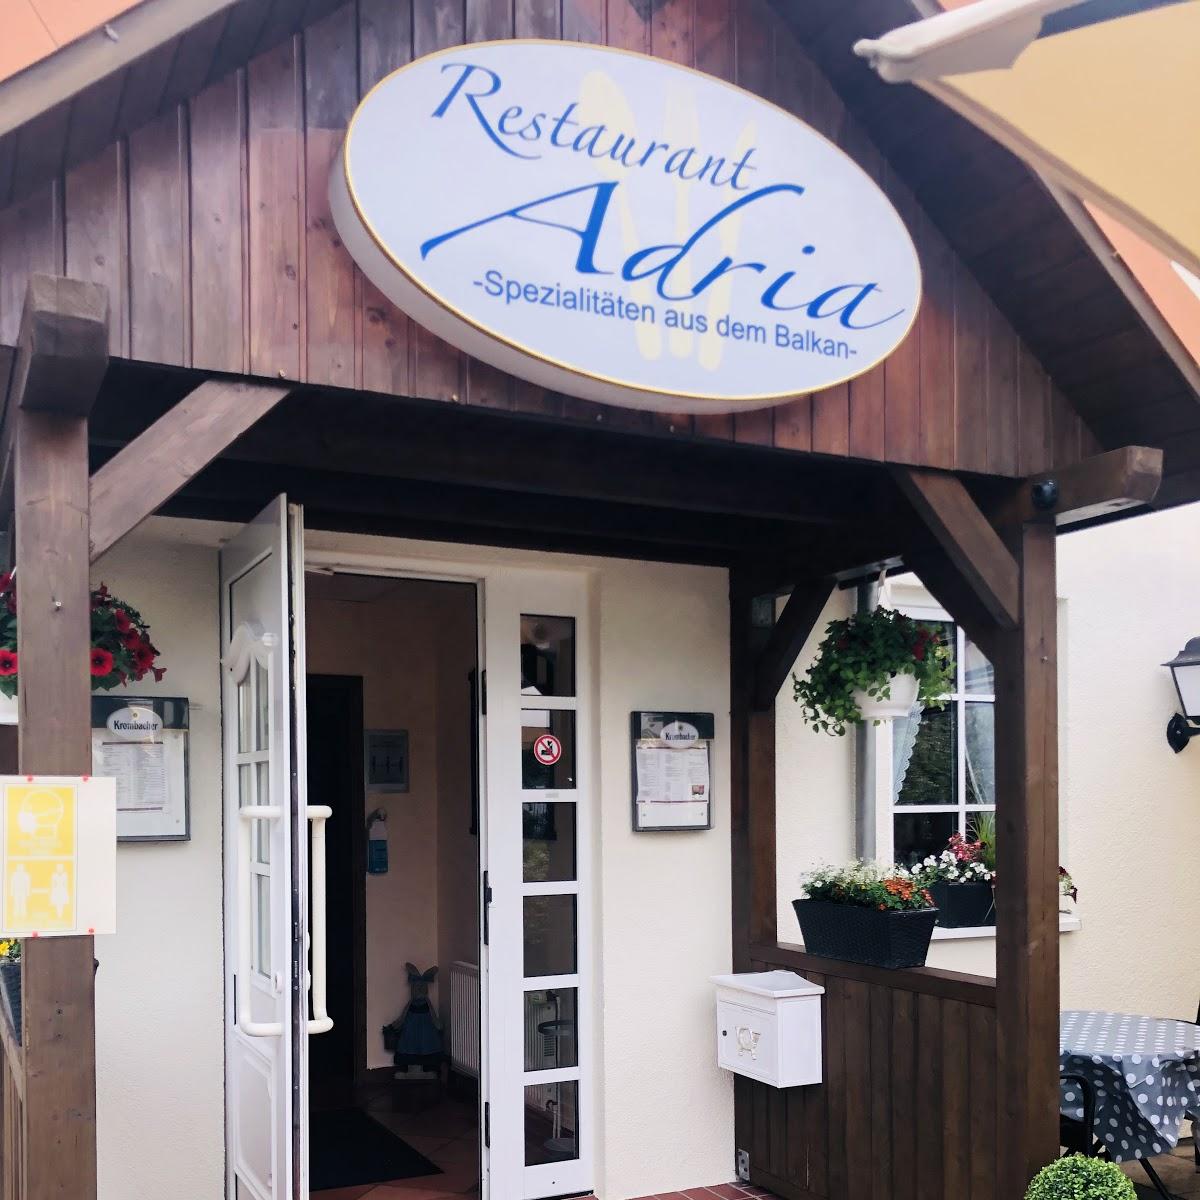 Restaurant "Restaurant Adria" in  Elmshorn